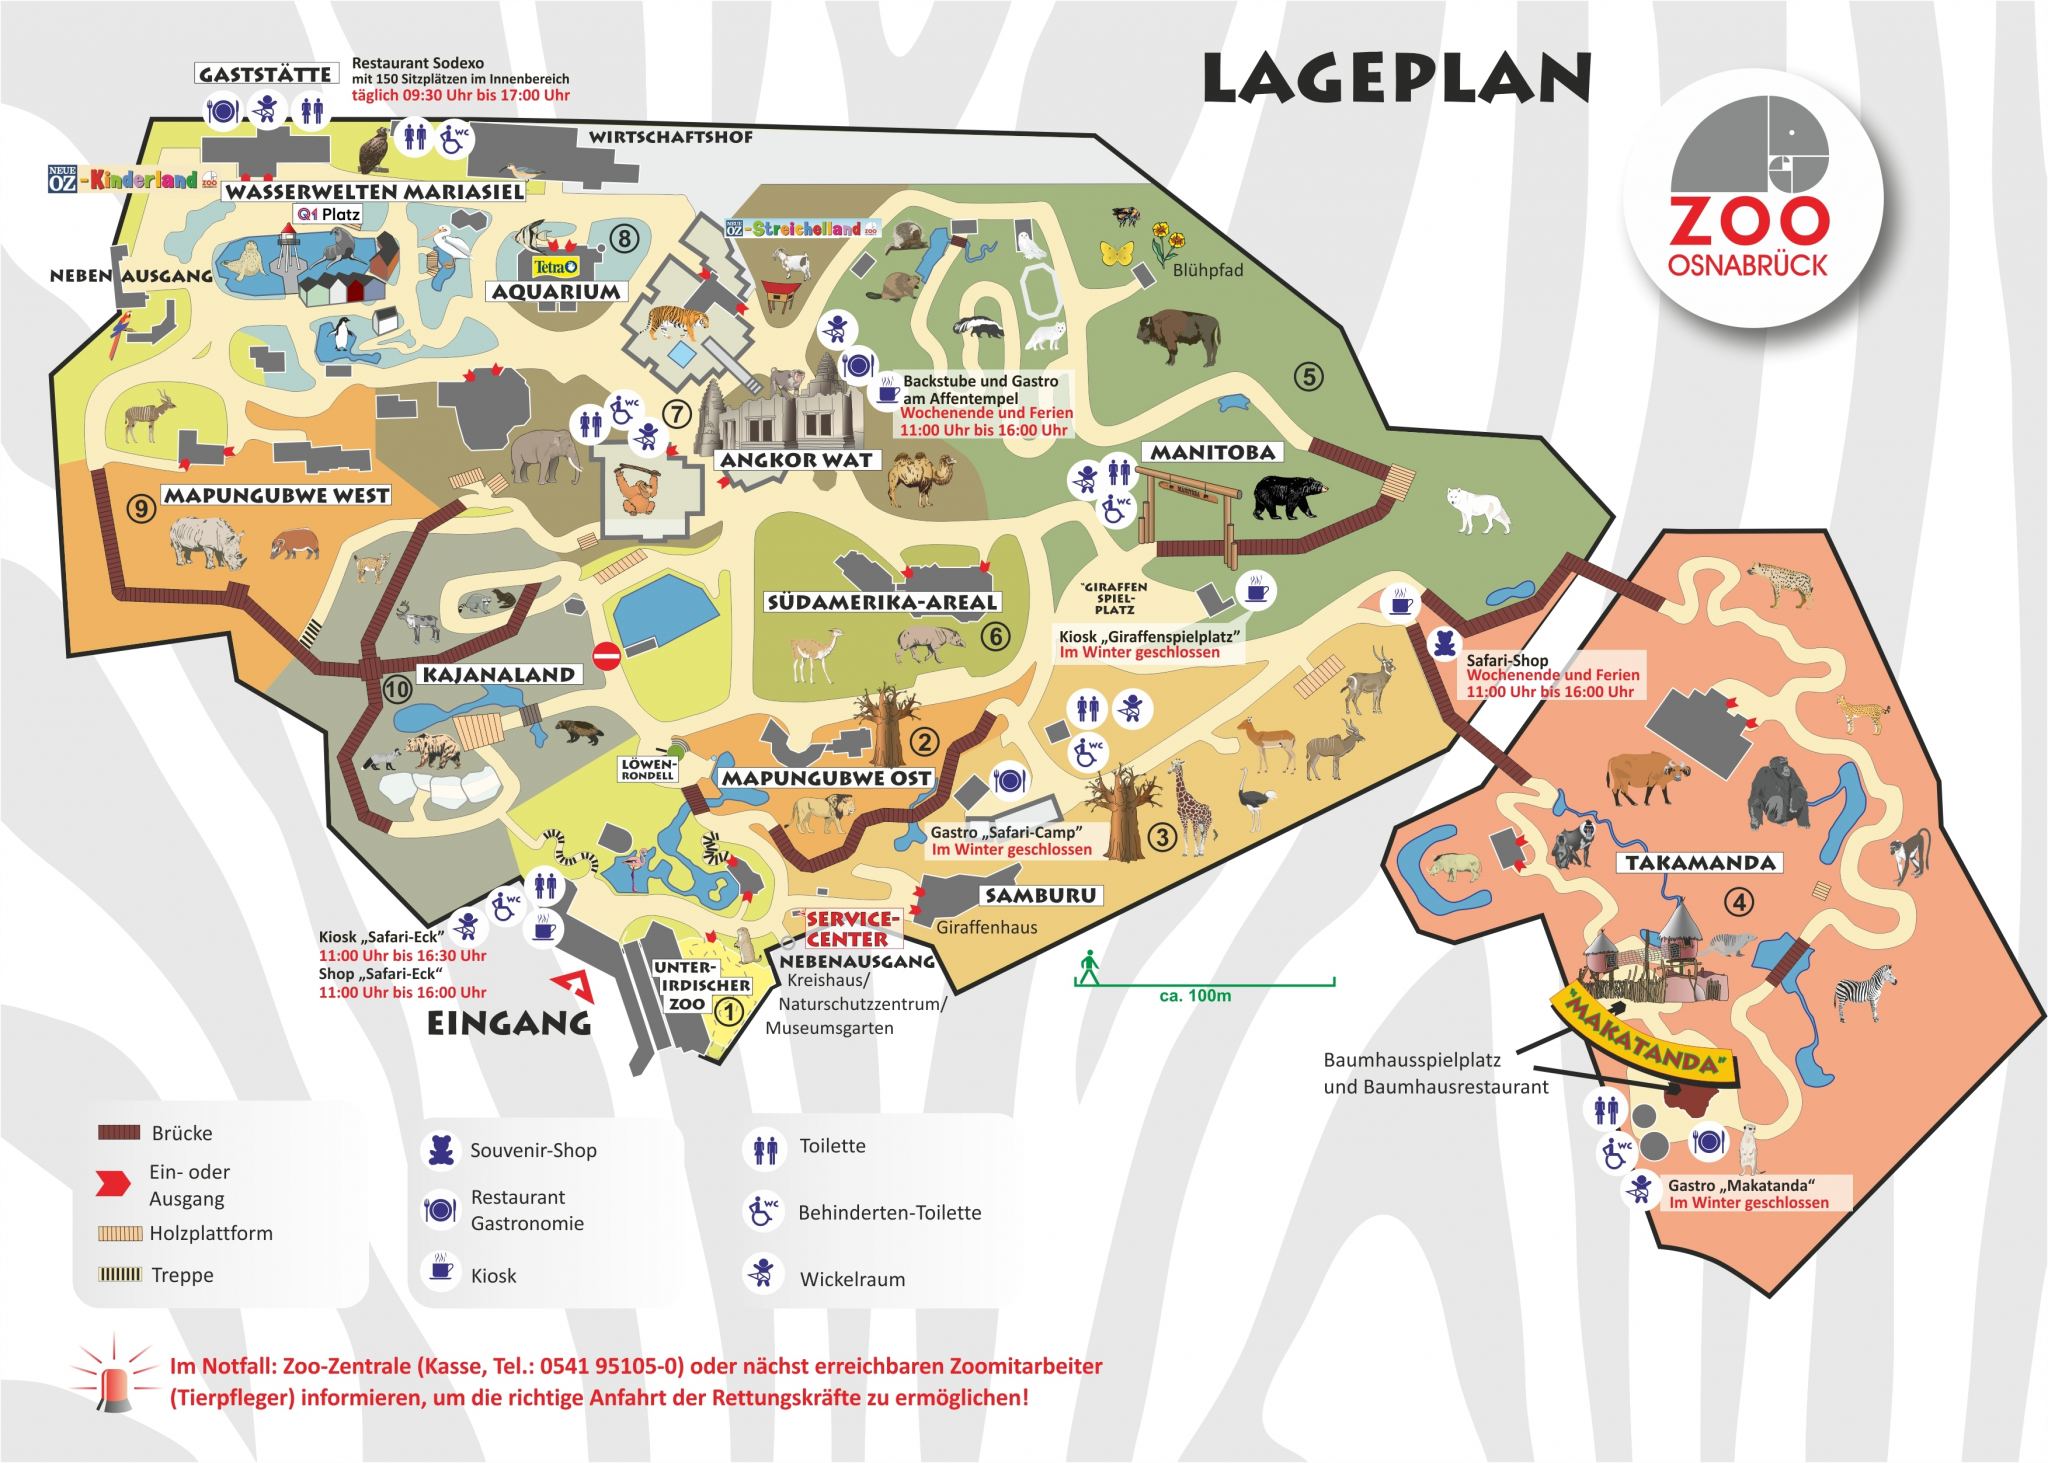 Lageplan Zoo Osnabrück - ©Gerd Schleid